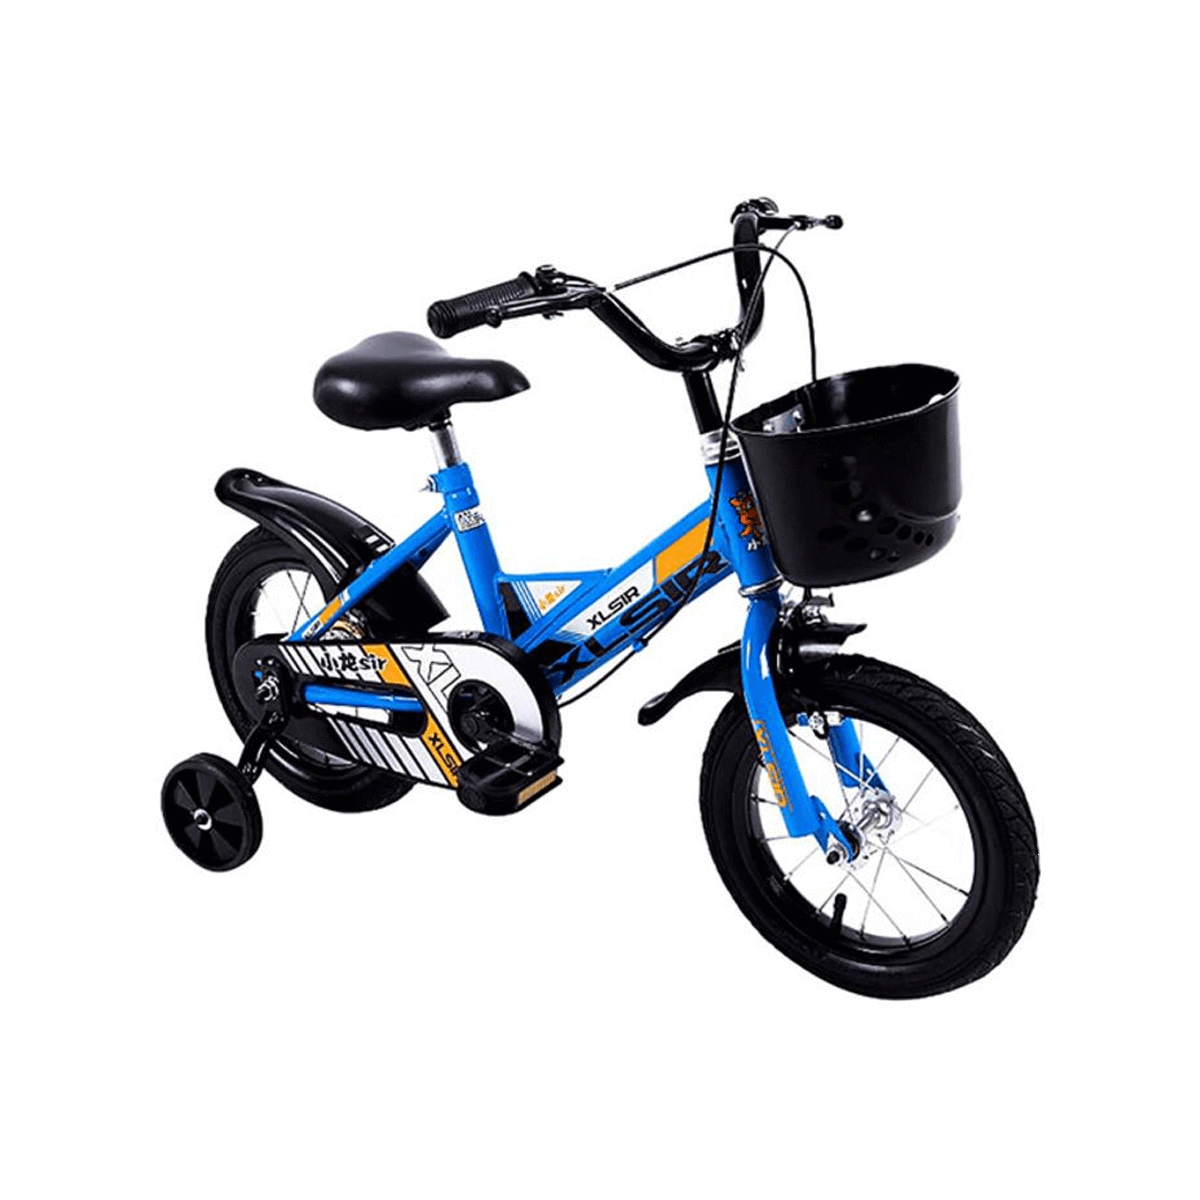 DESERT STAR Wheels Kids Bicycle 14inch